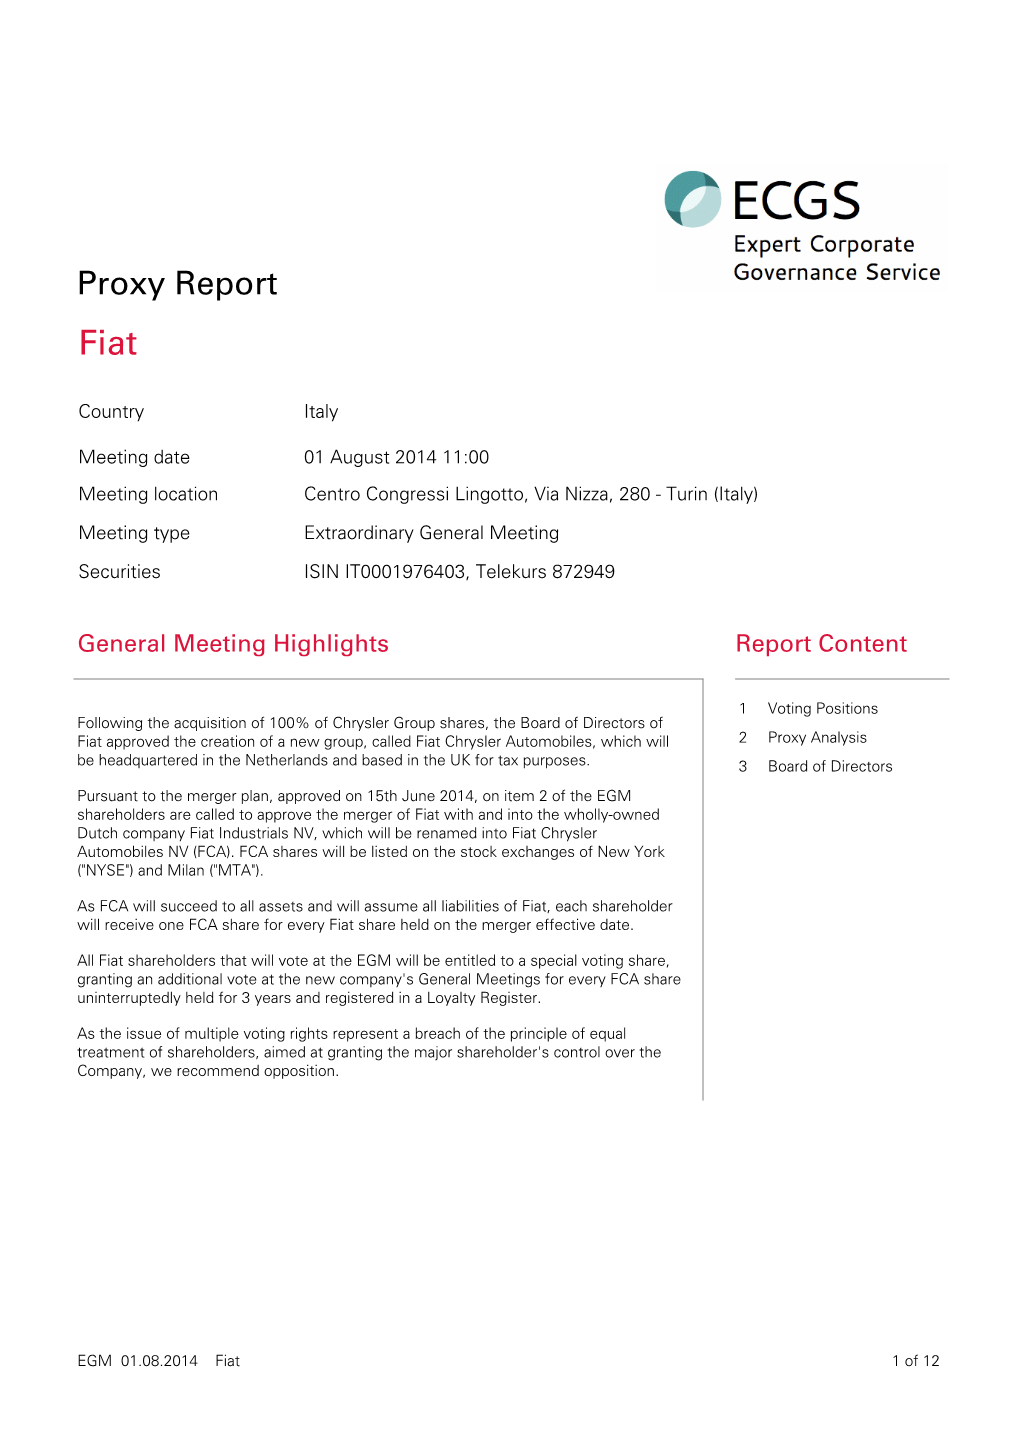 Proxy Report Fiat